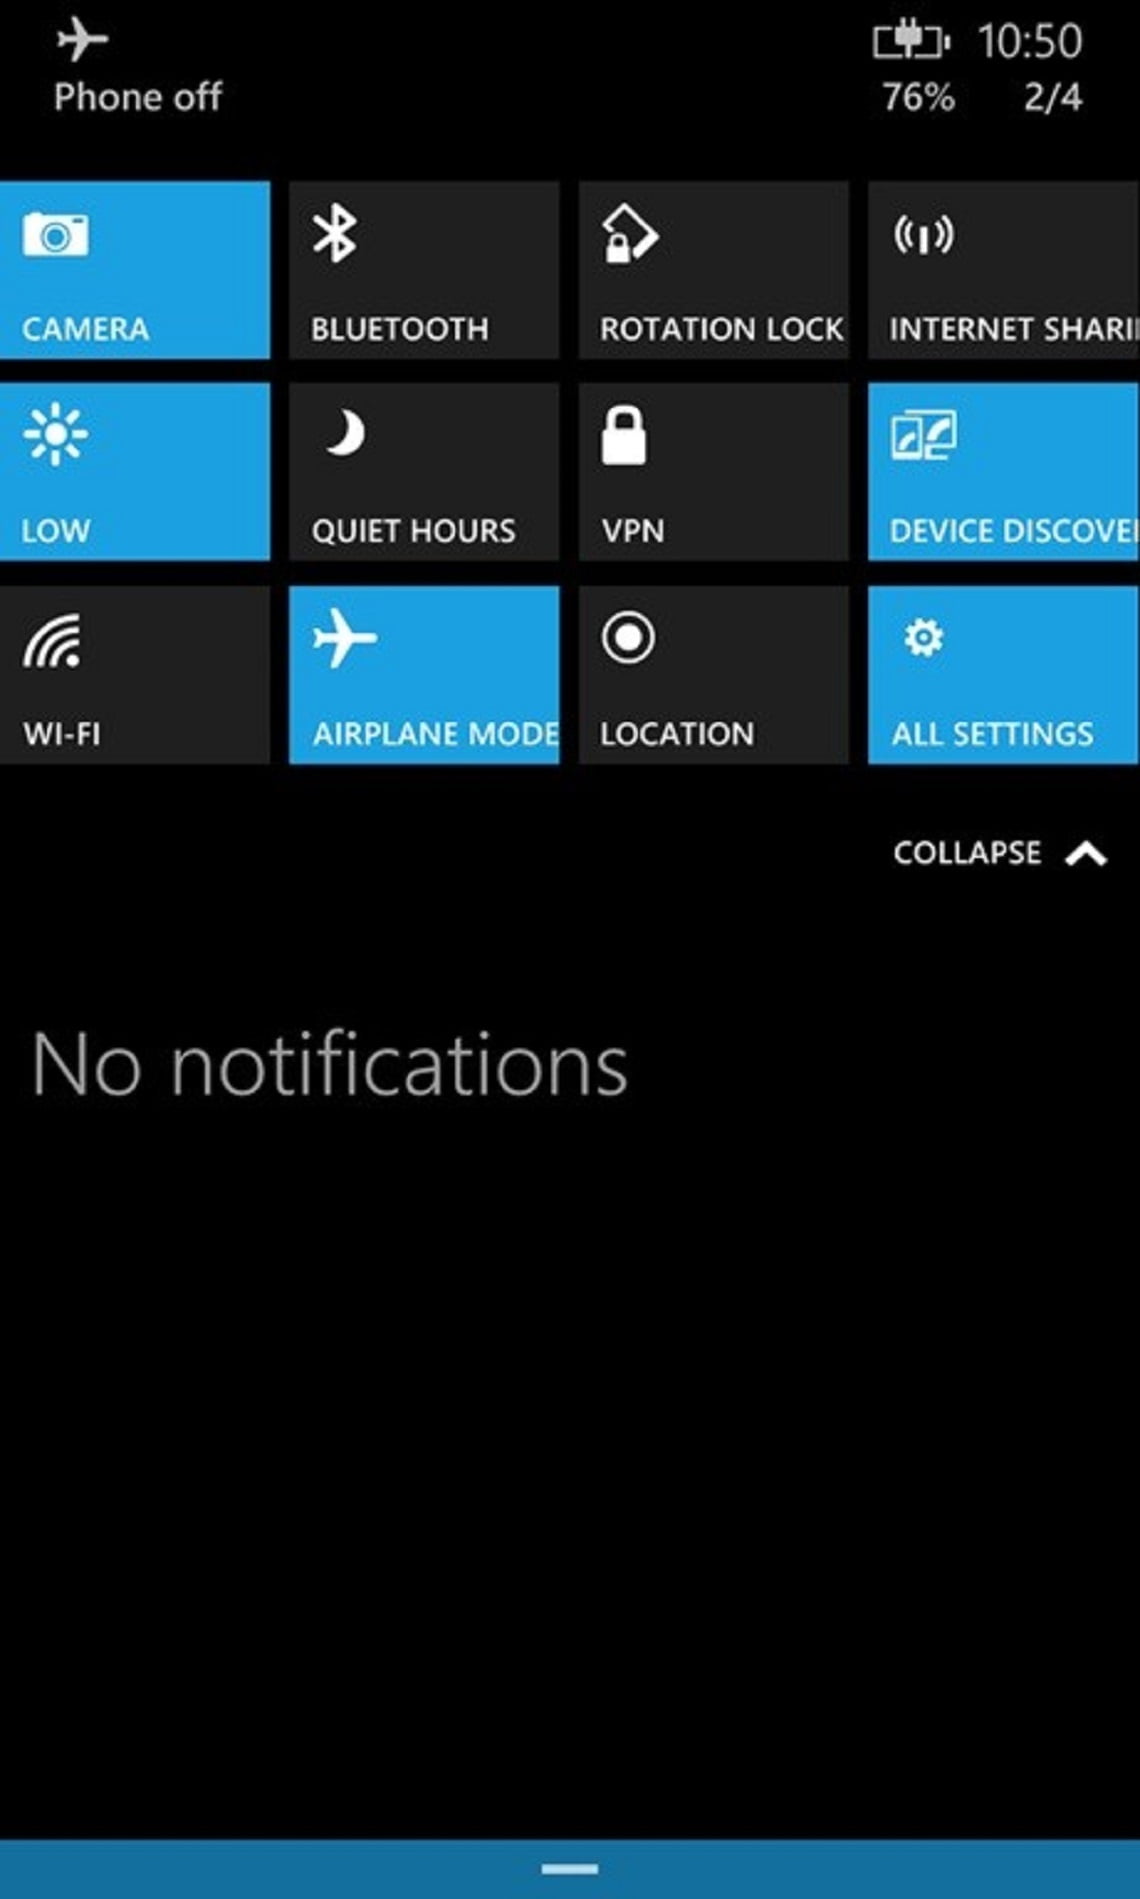 Windows 10 for Phones Screenshots Leaked 472249 4